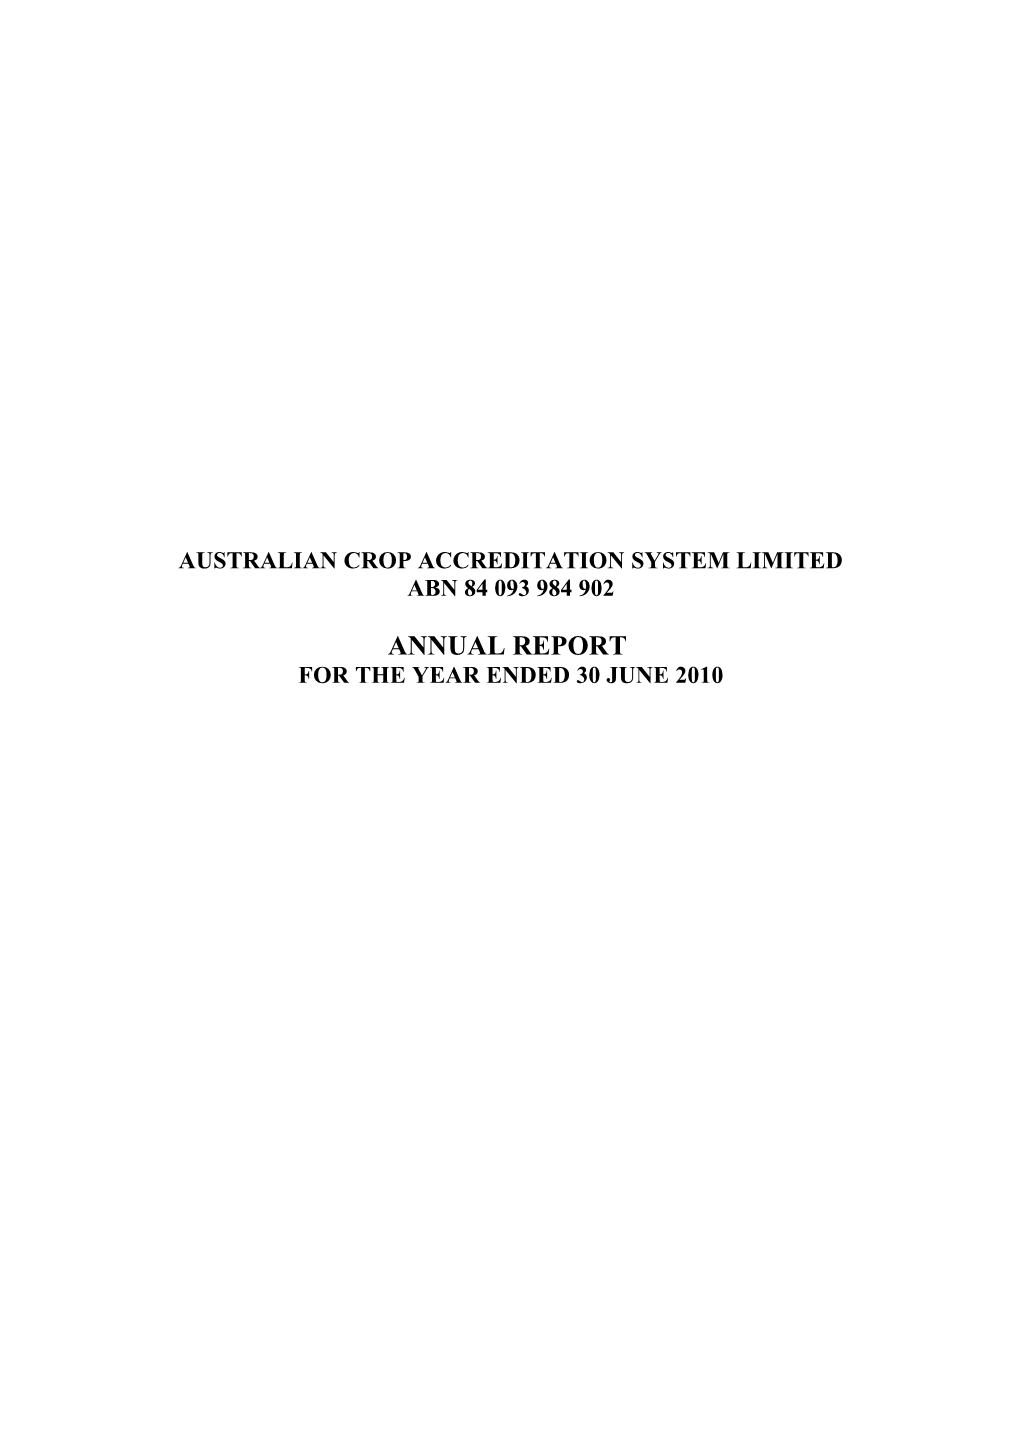 Australian Crop Accreditation System Limited